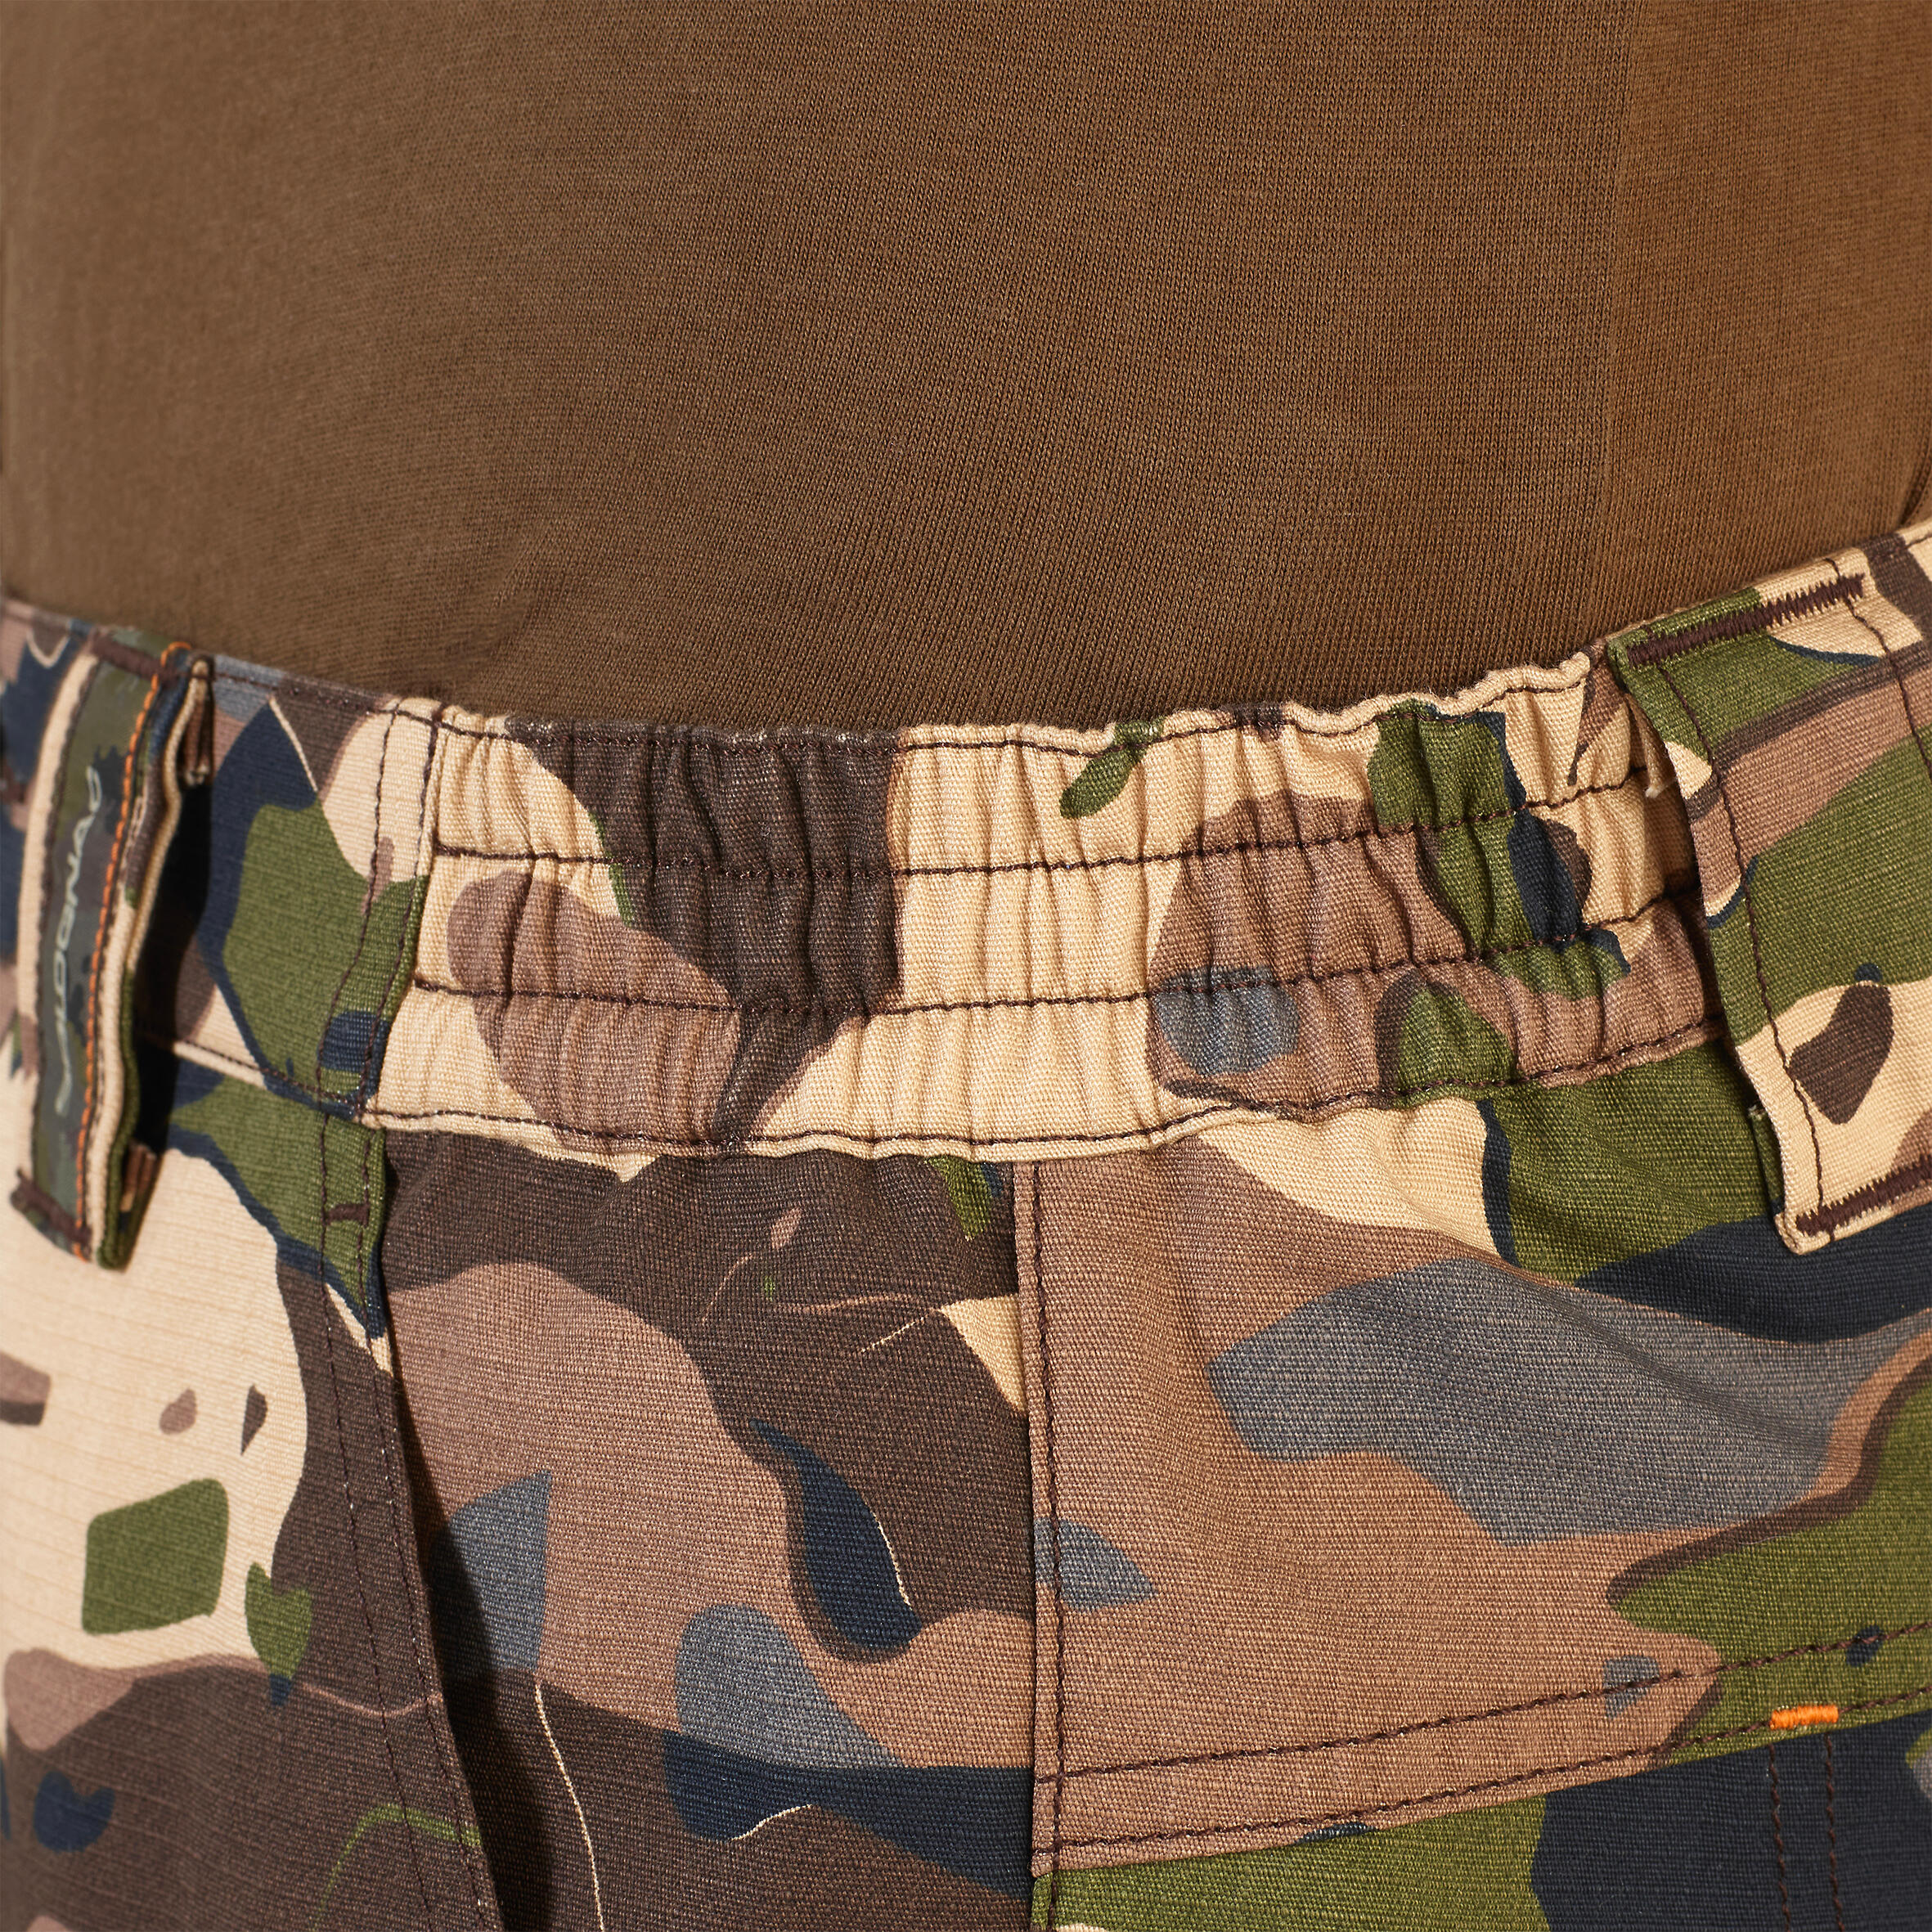 Bermuda shorts 500 - Woodland V1 brown LTD camouflage 7/10